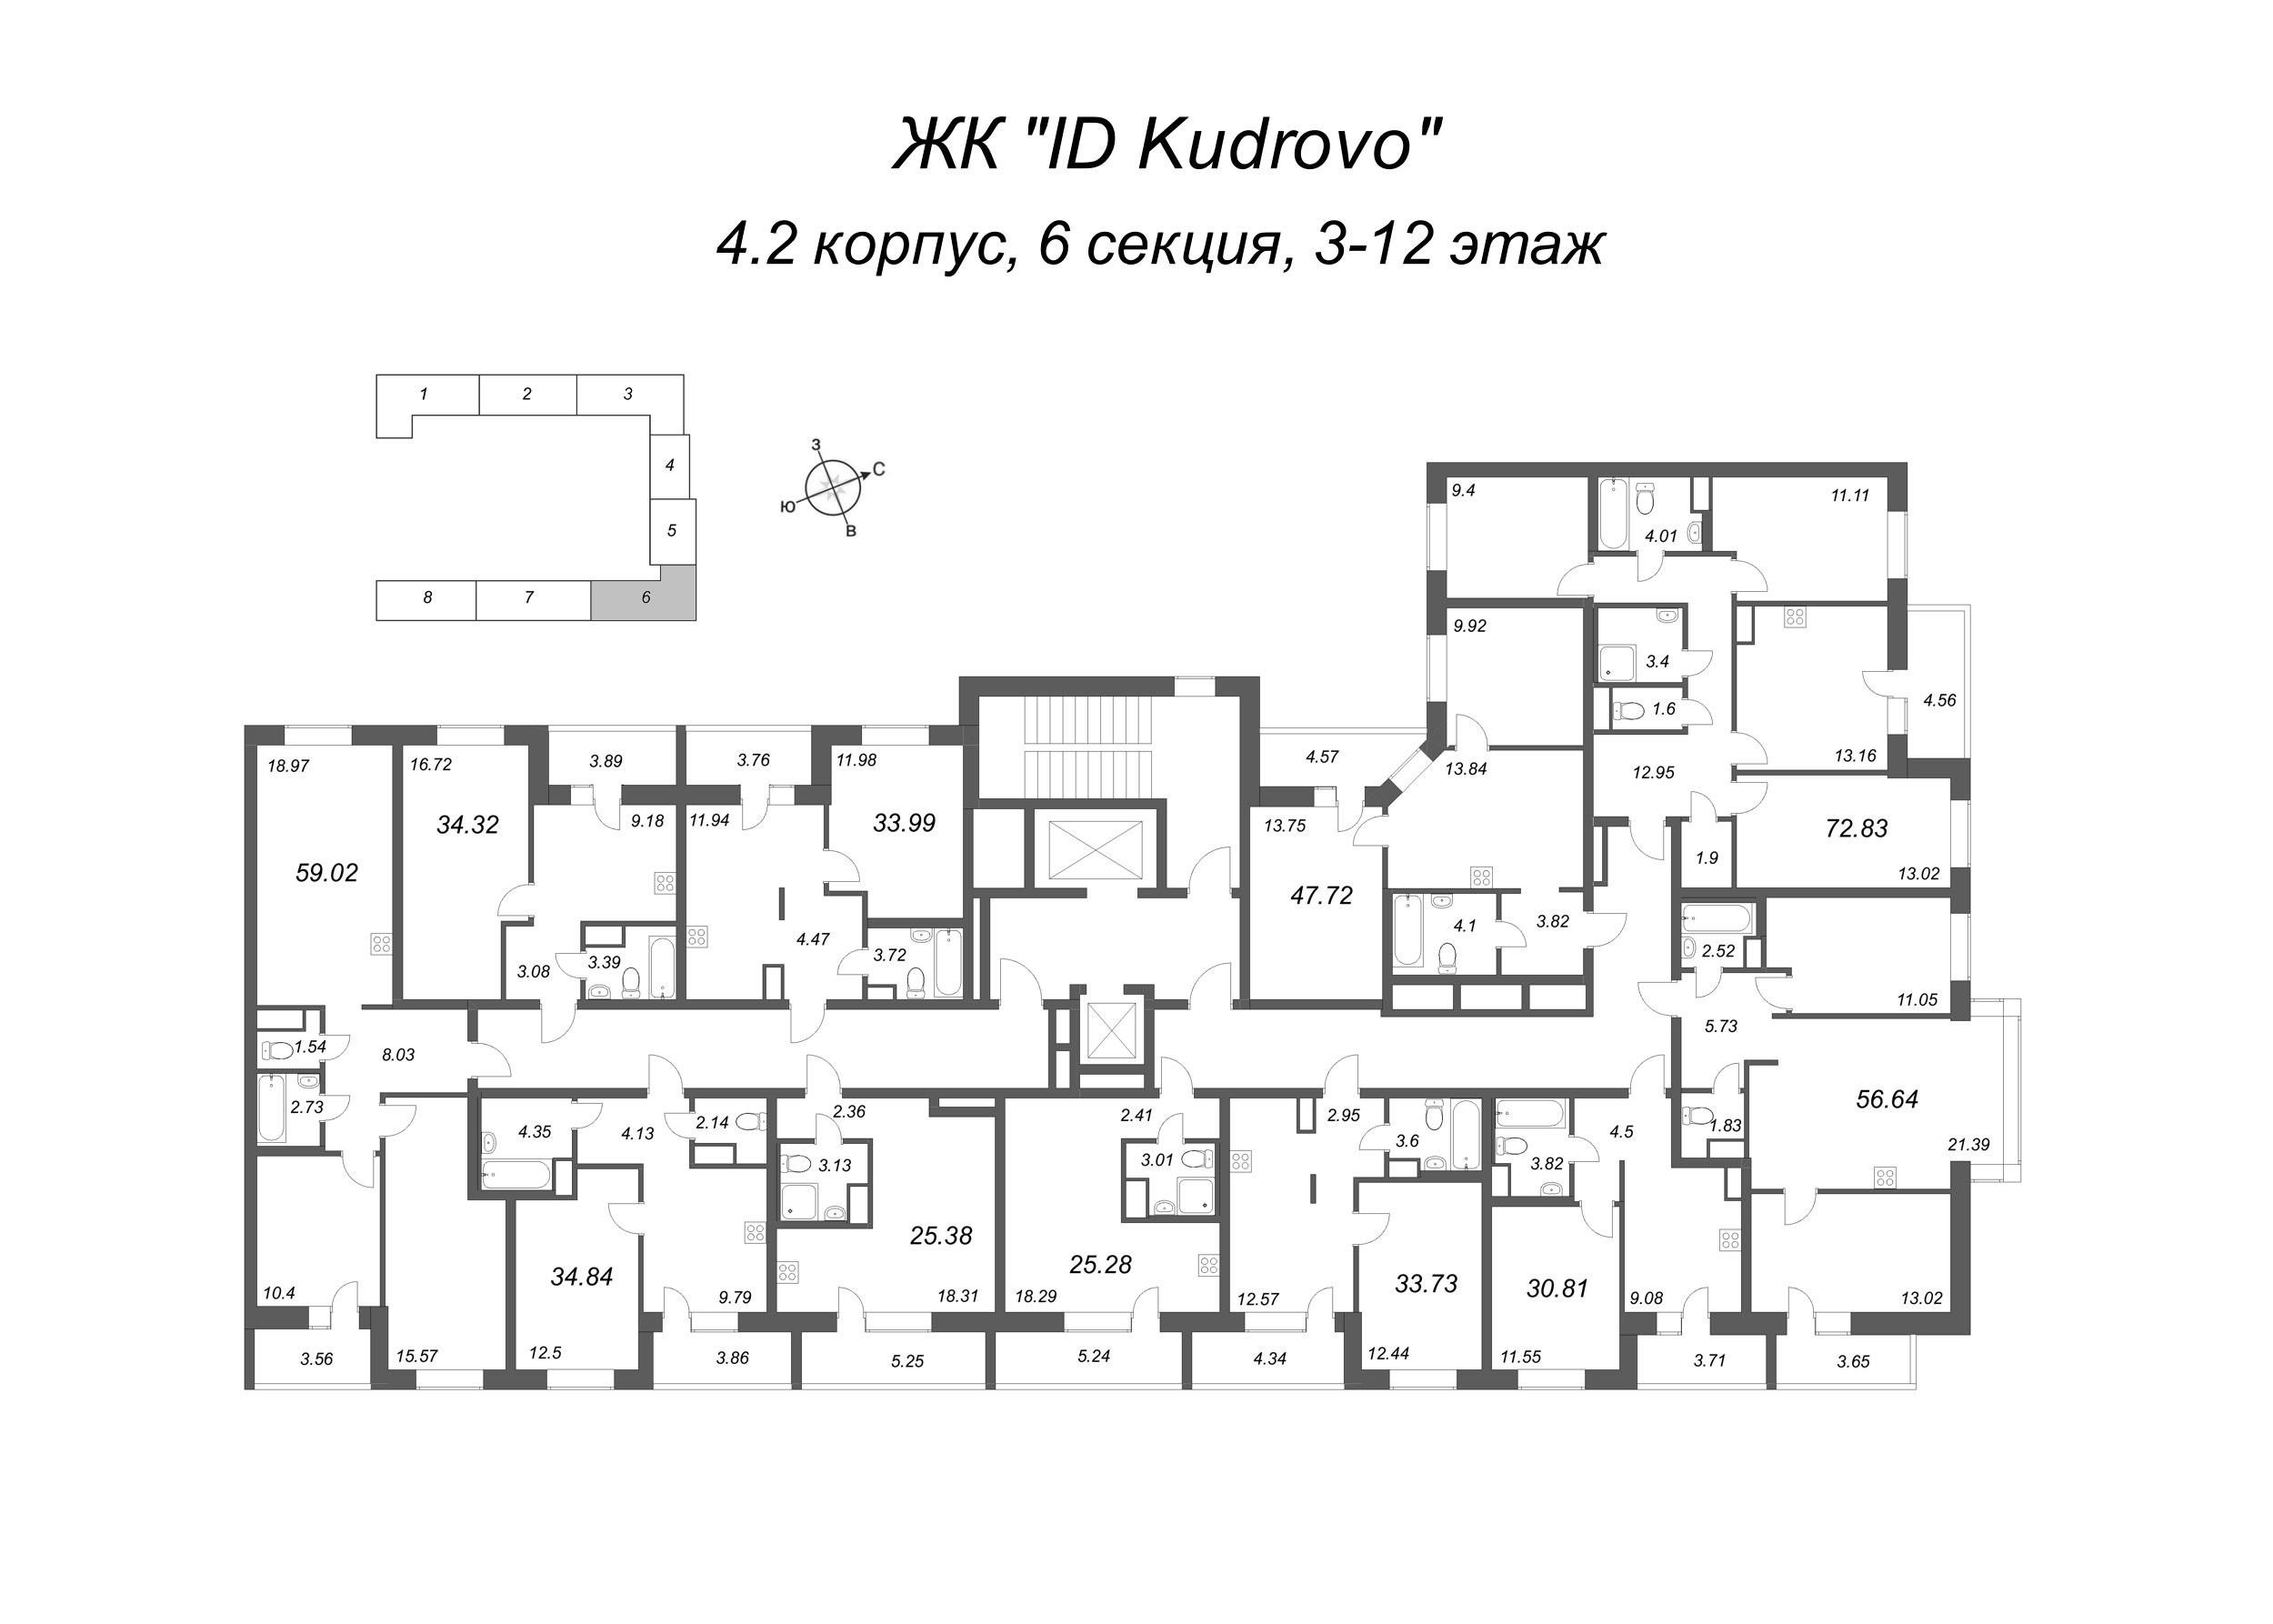 3-комнатная (Евро) квартира, 59.02 м² в ЖК "ID Kudrovo" - планировка этажа